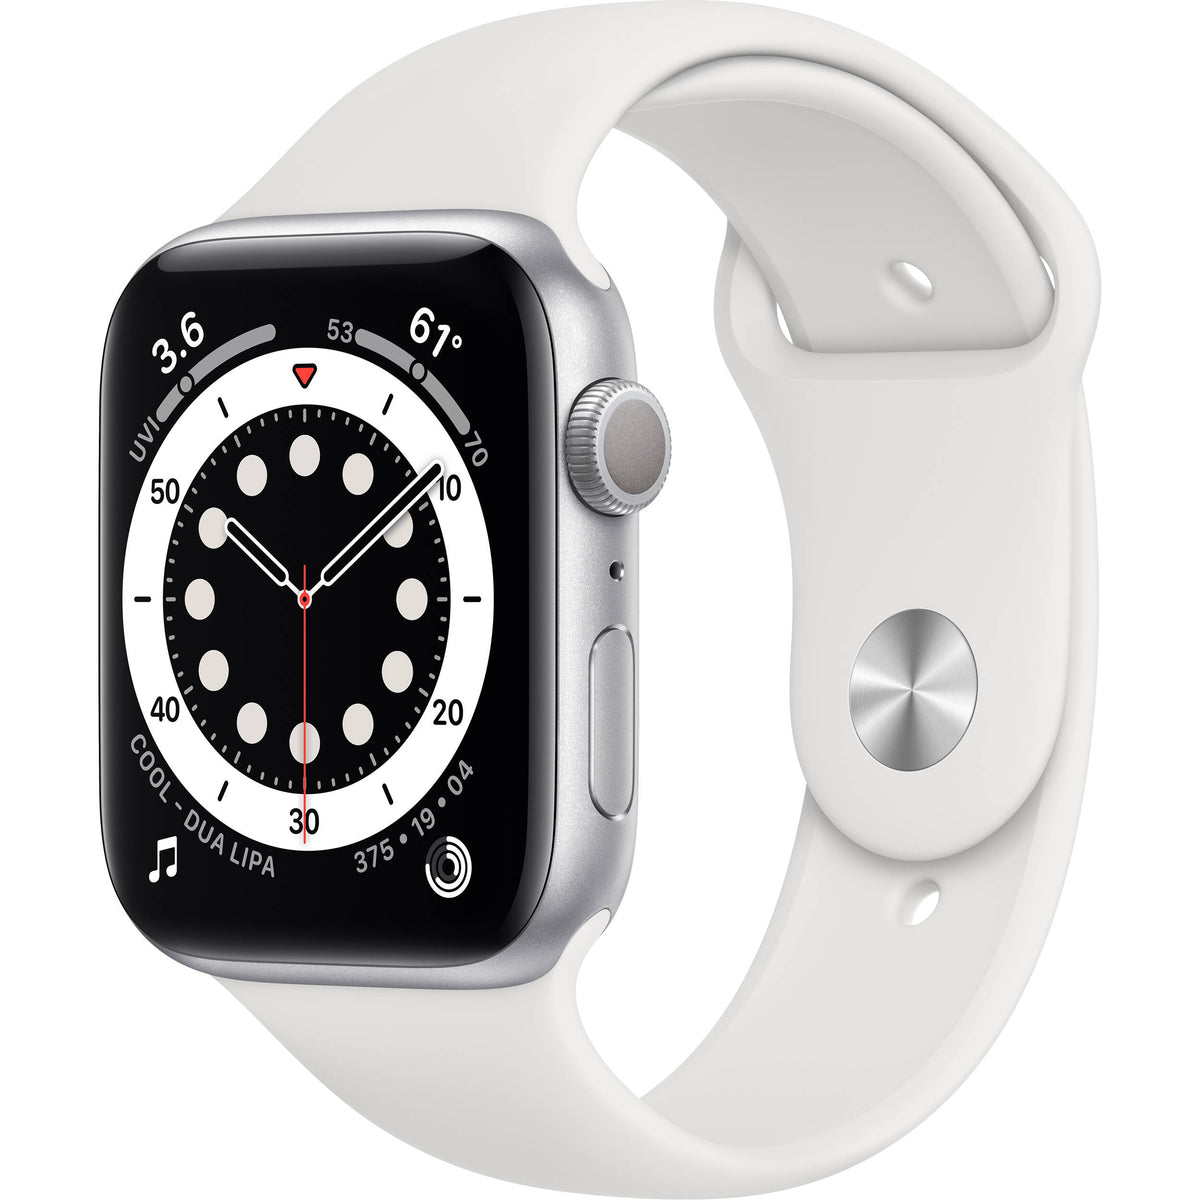 Apple Watch Series 6 – Cellular Savings